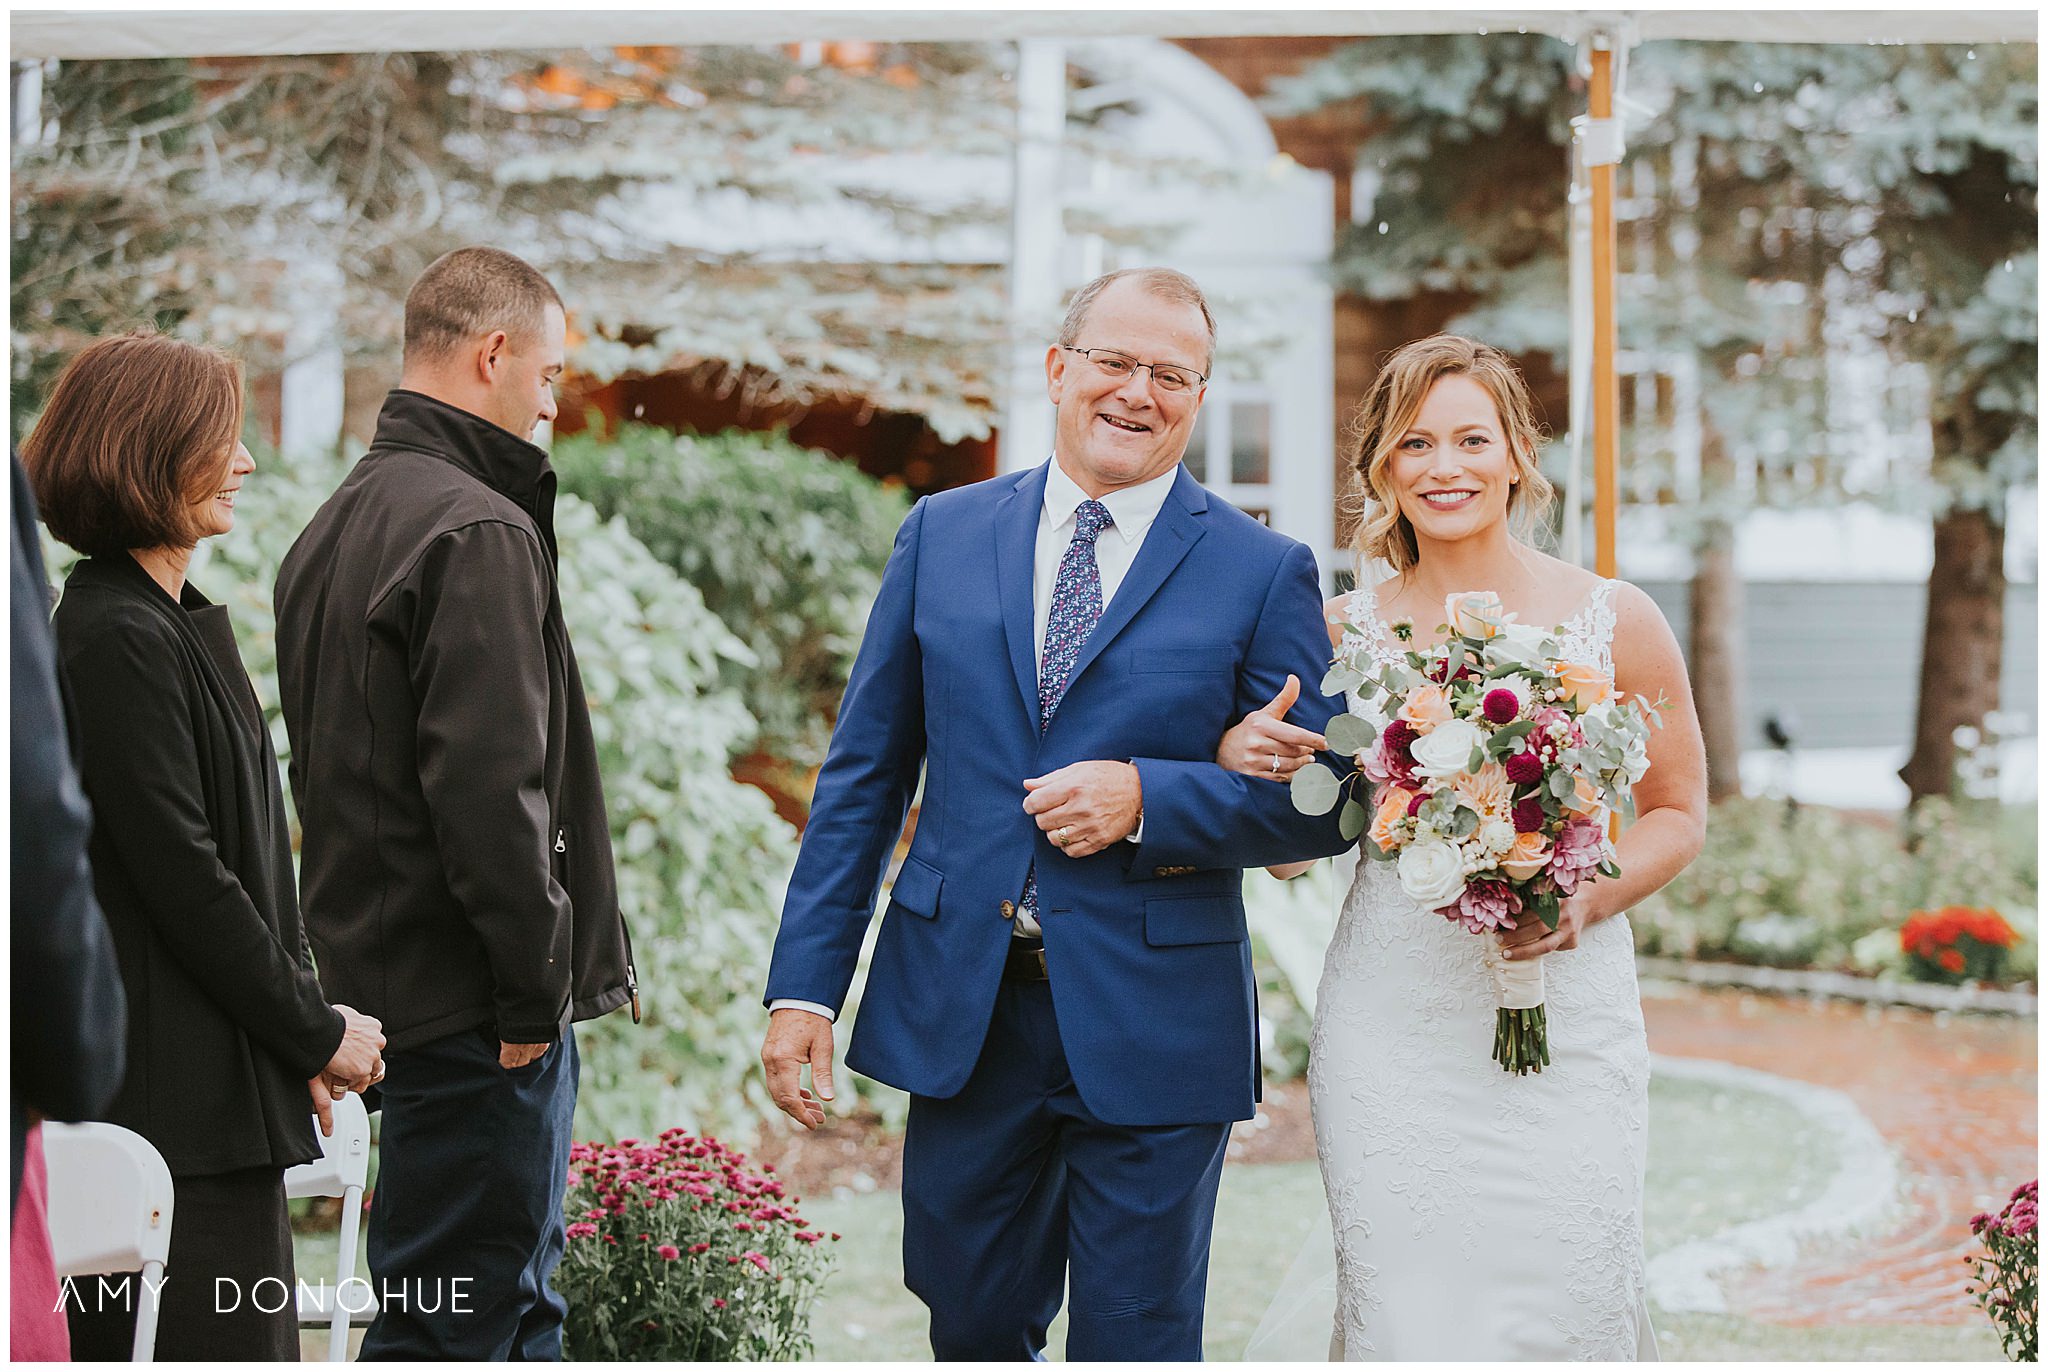 Wedding Ceremony | New Hampshire Wedding Photographer | Church Landing at Mill Falls, New Hampshire | © Amy Donohue Photography